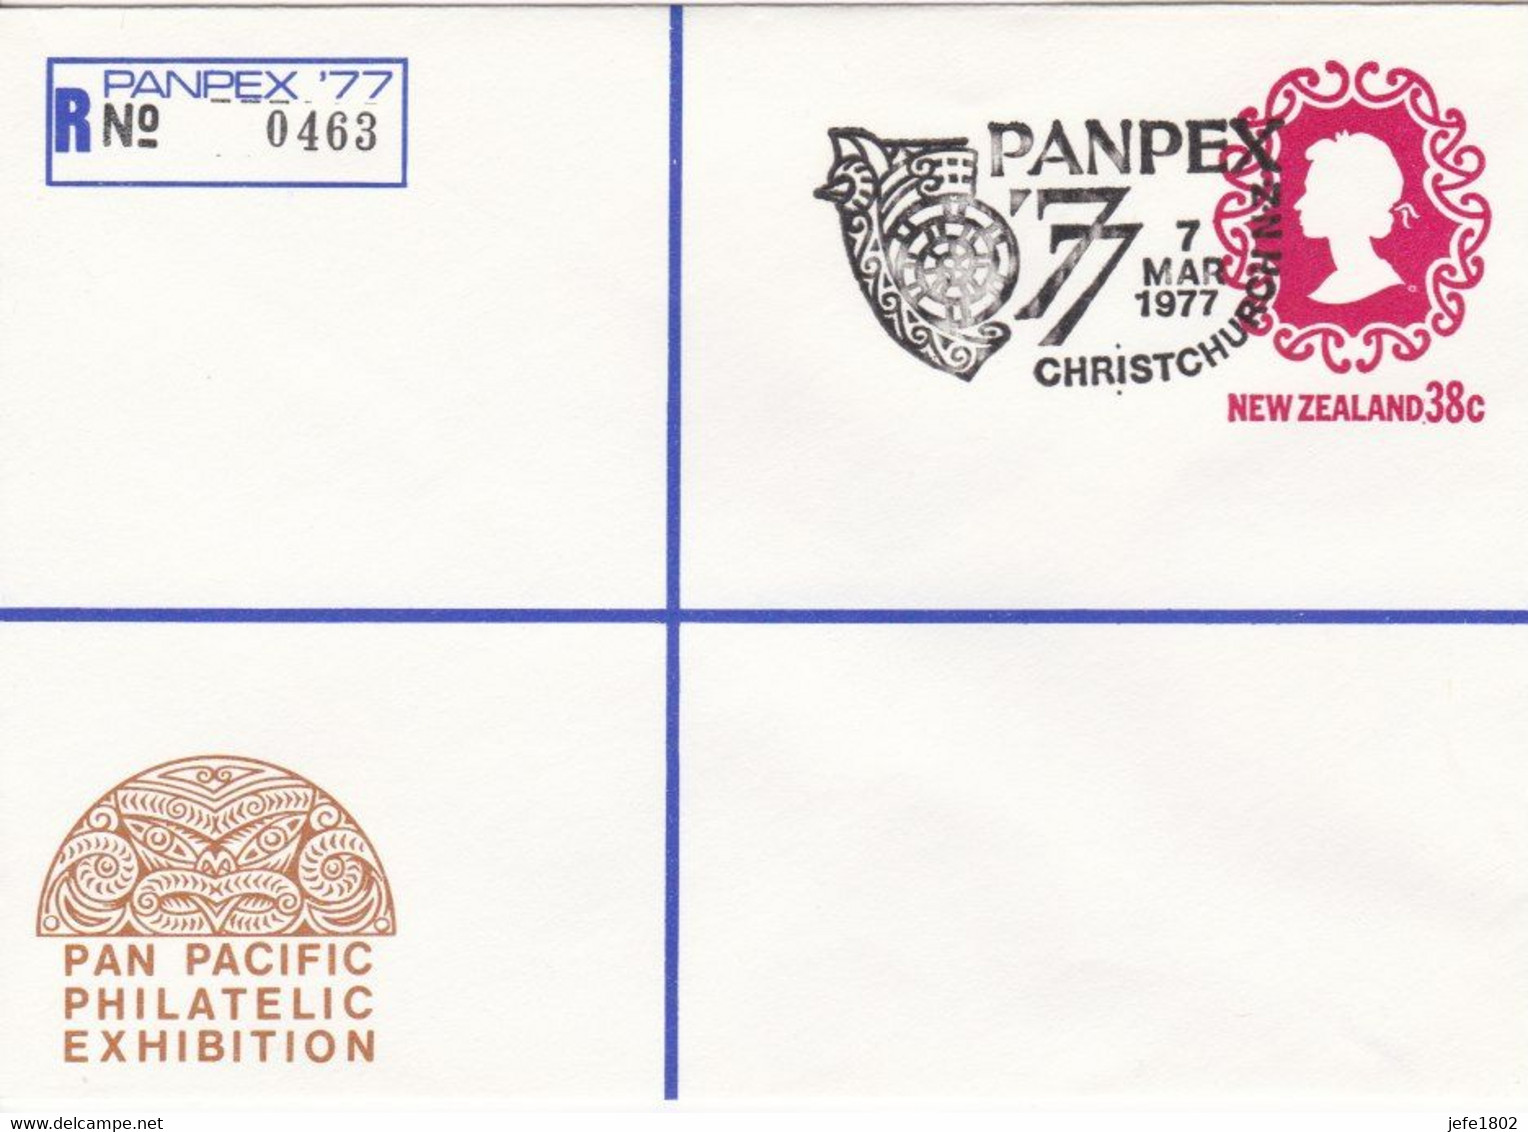 Registered Letter PANPEX '77 - N° 0463 - TAI-IHU Figure-head Of Maori War Canoe  - 7 Mar 1977 - Interi Postali